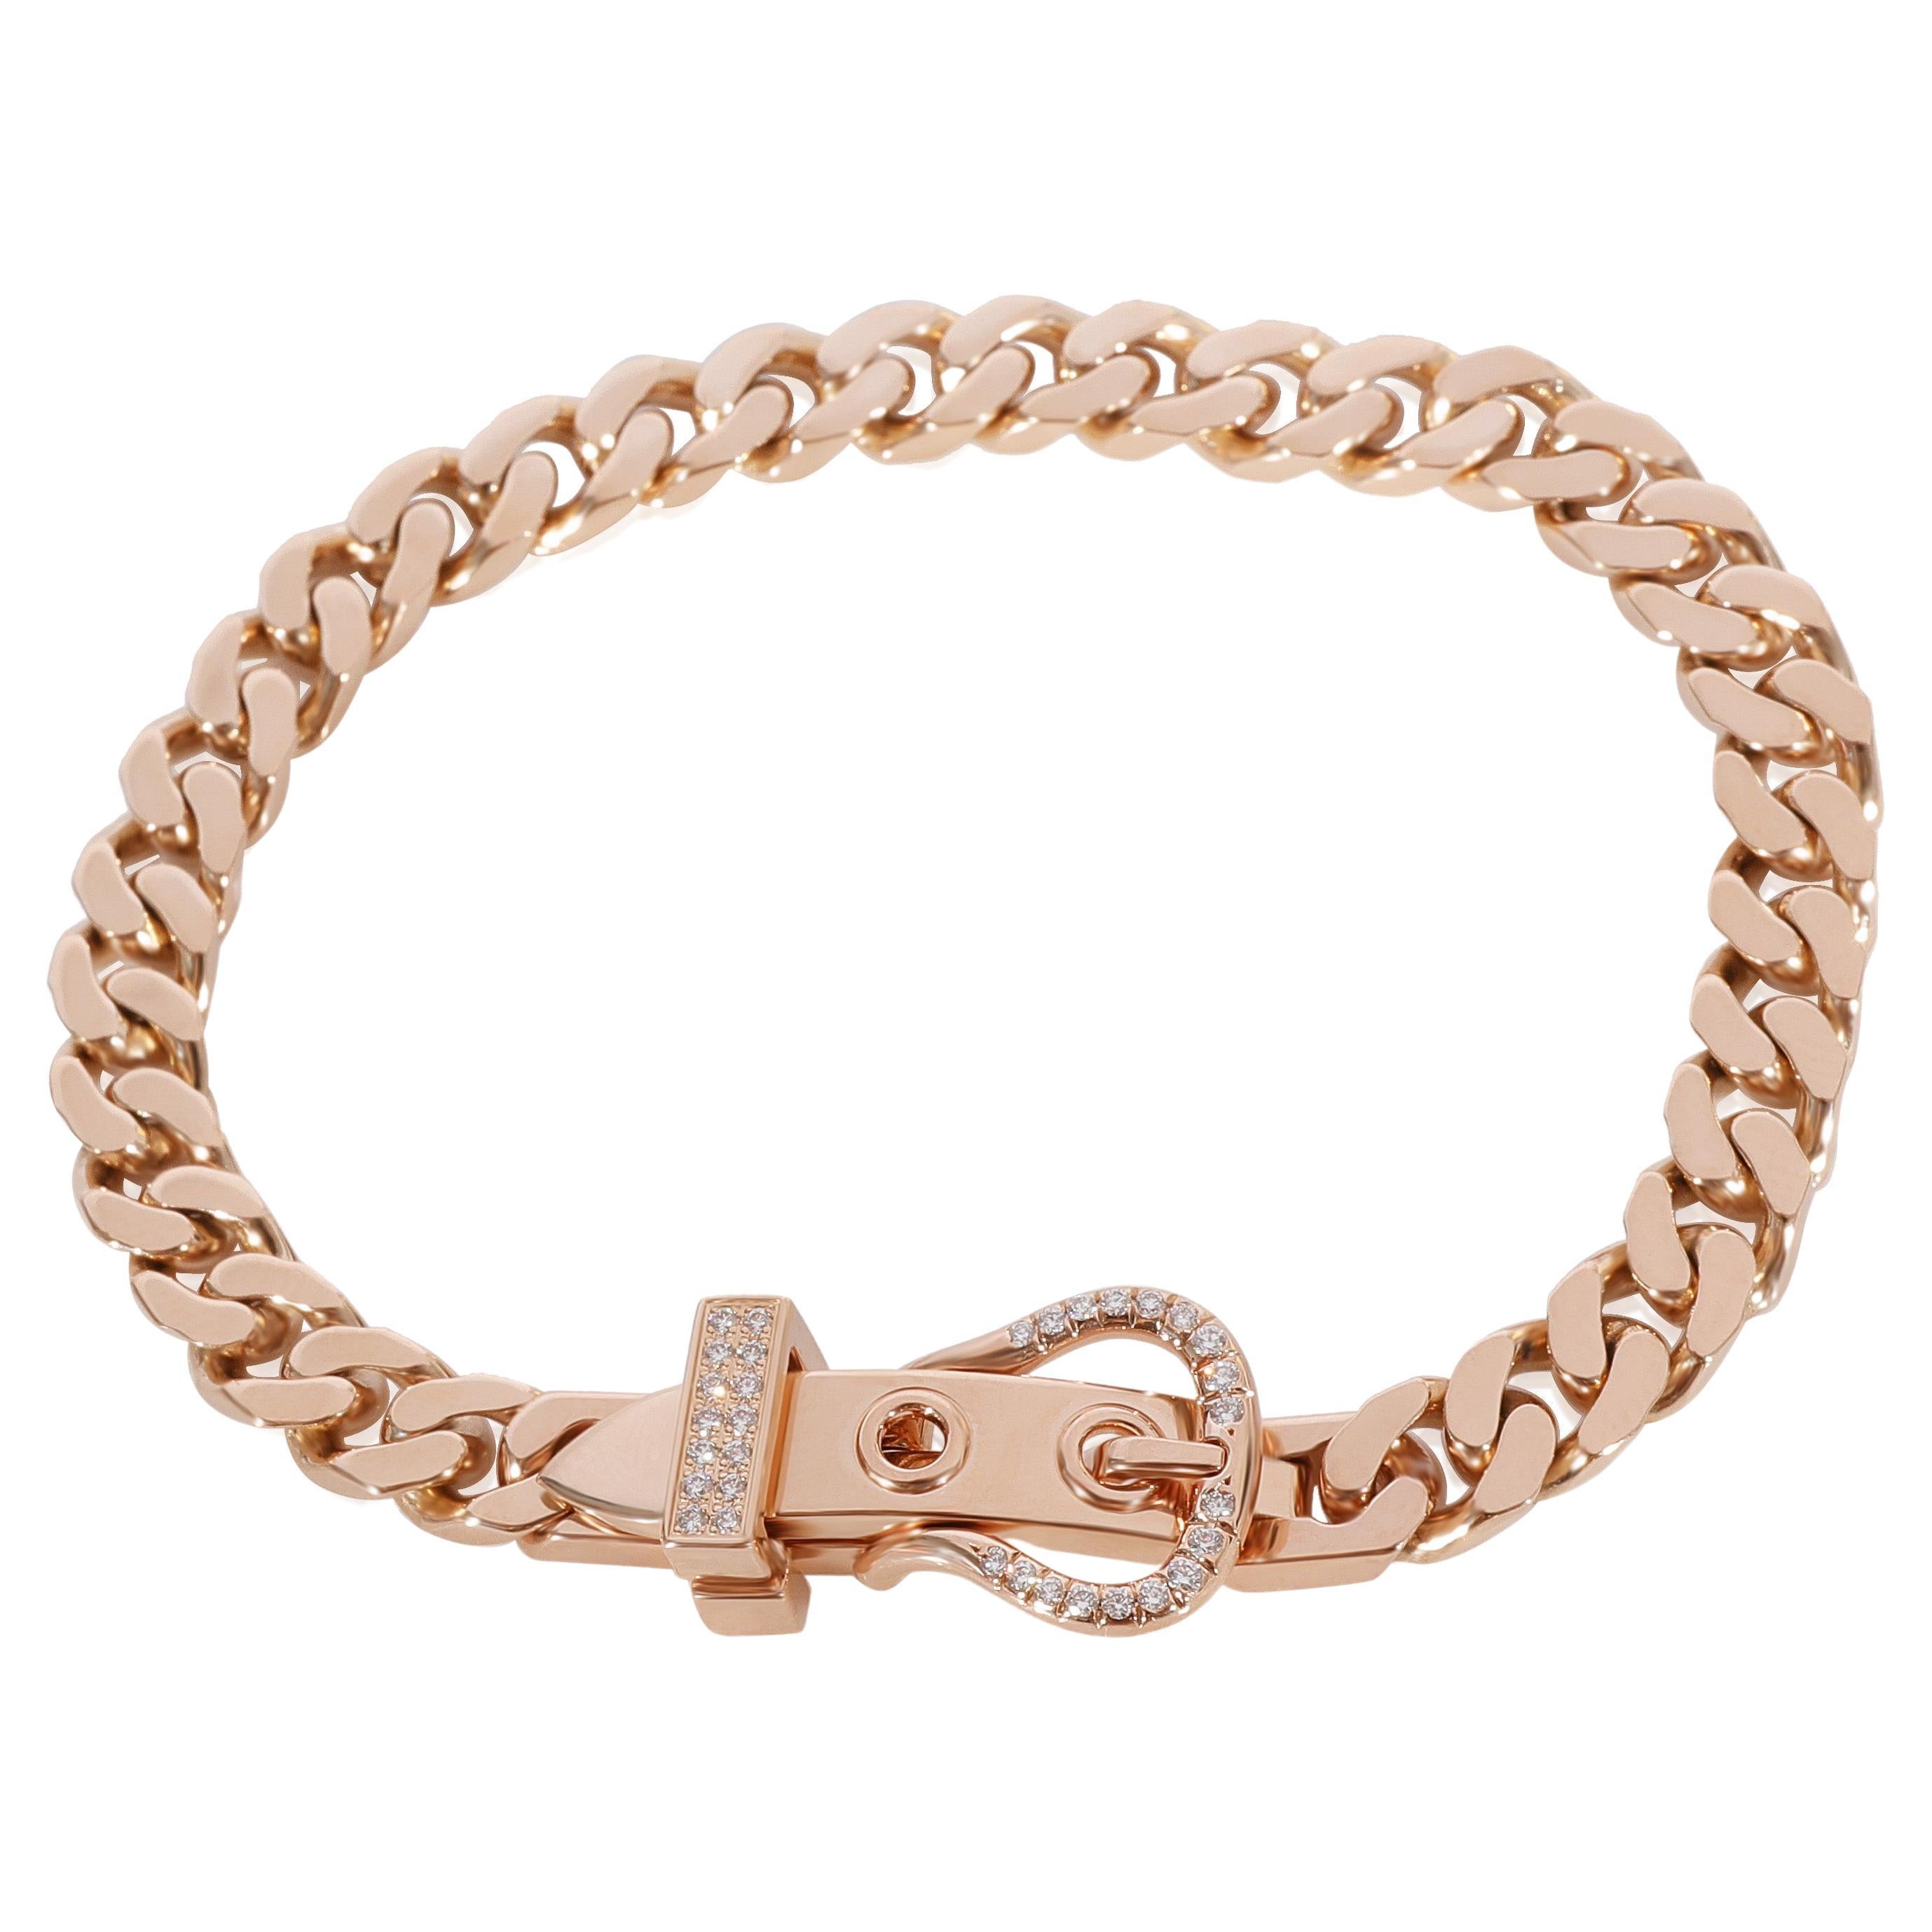 Hermès Boucle Sellier Bracelet Diamond Bracelet in 18k Rose Gold 0.18 Ctw